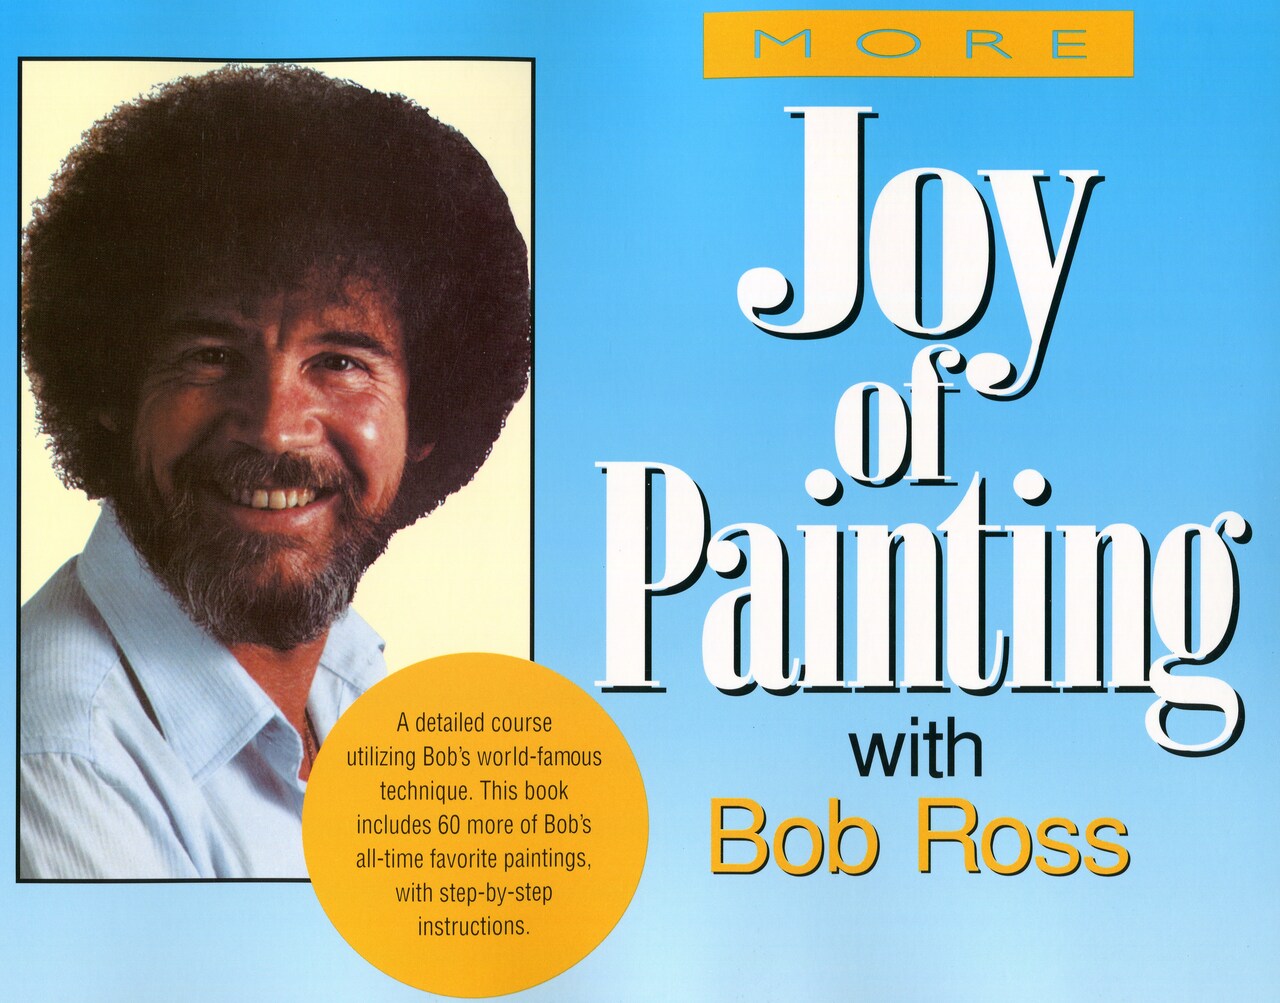 Bob Ross Books